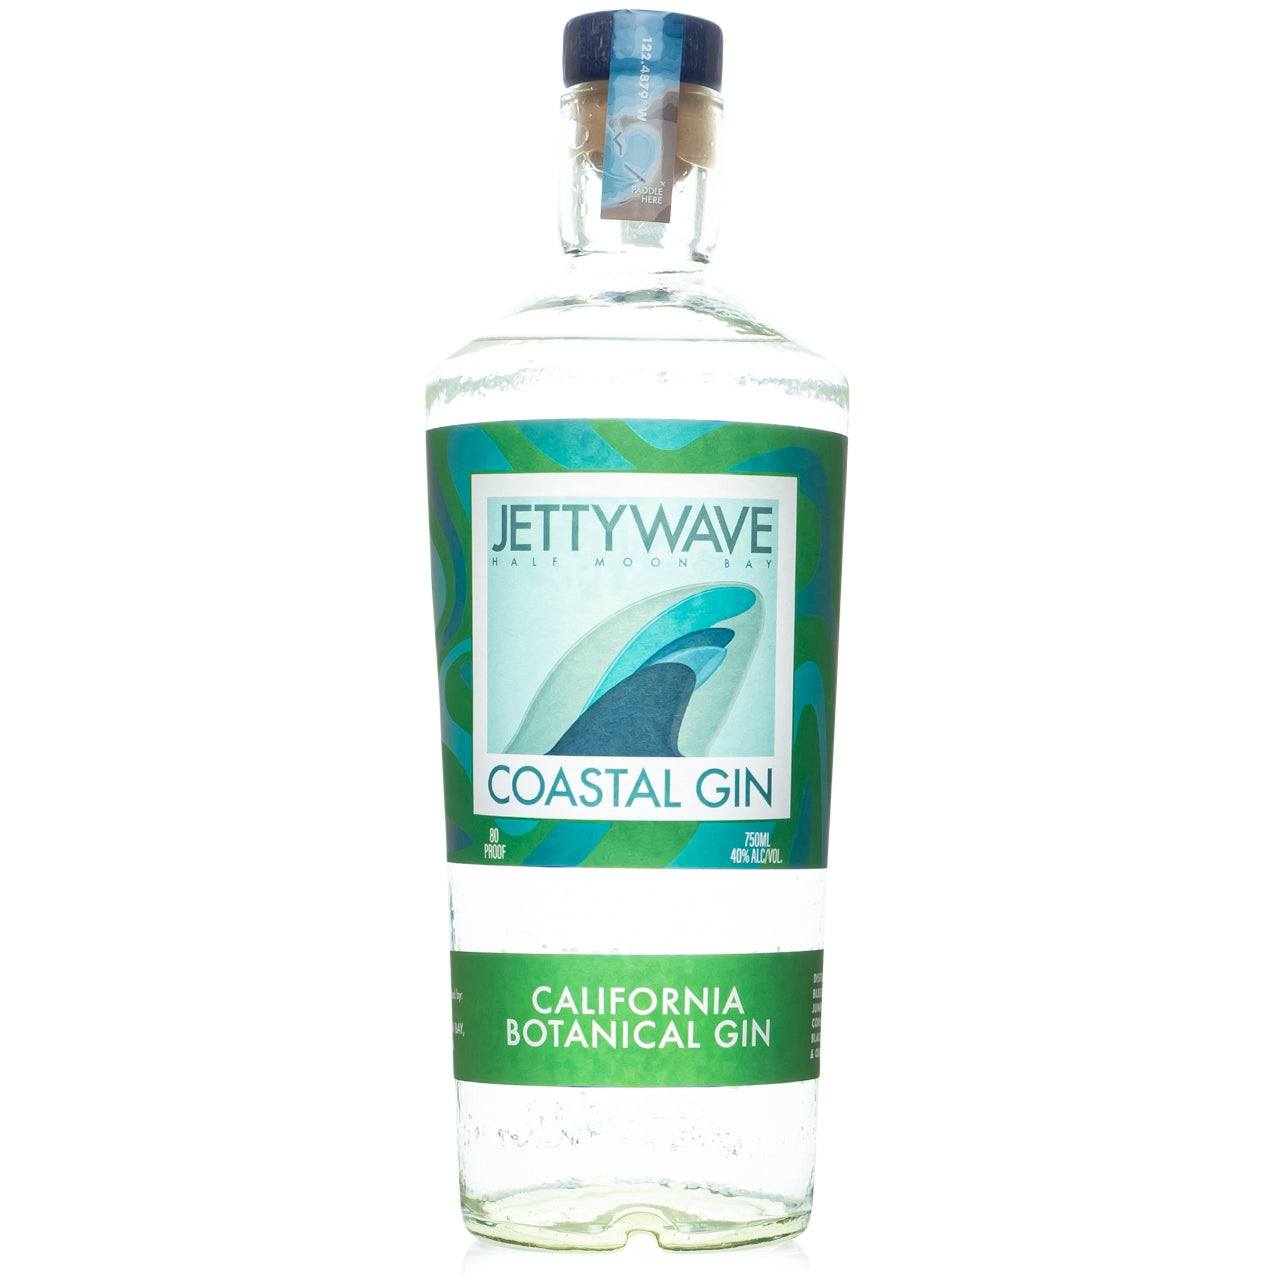 Jettywave Coastal Gin